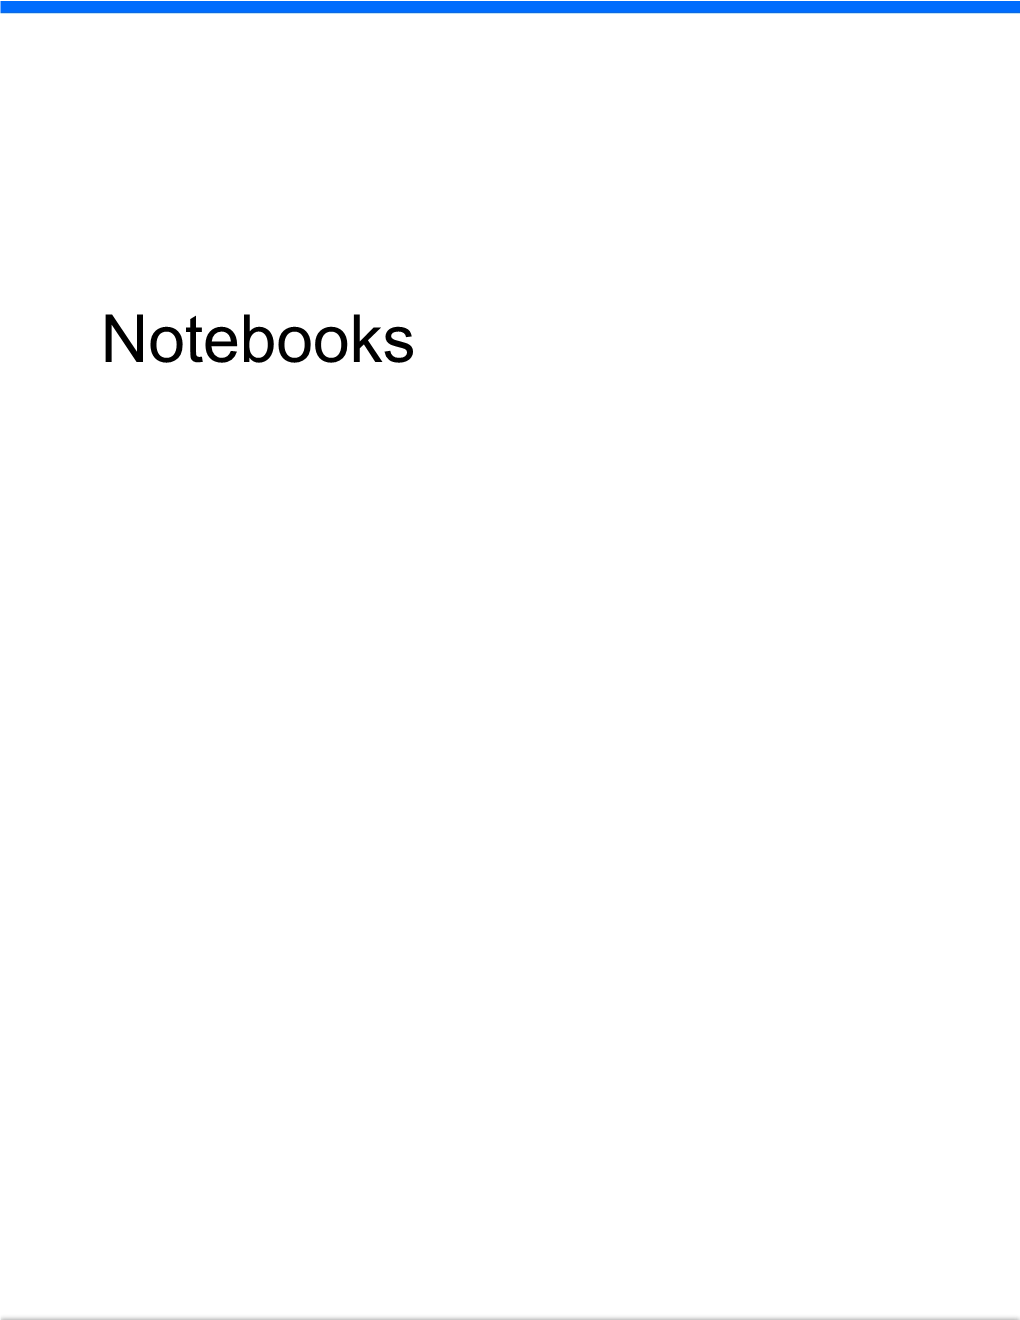 Notebooks Shana Anderson‐Nute, BASI Shana@Spitfireadvertising.Com